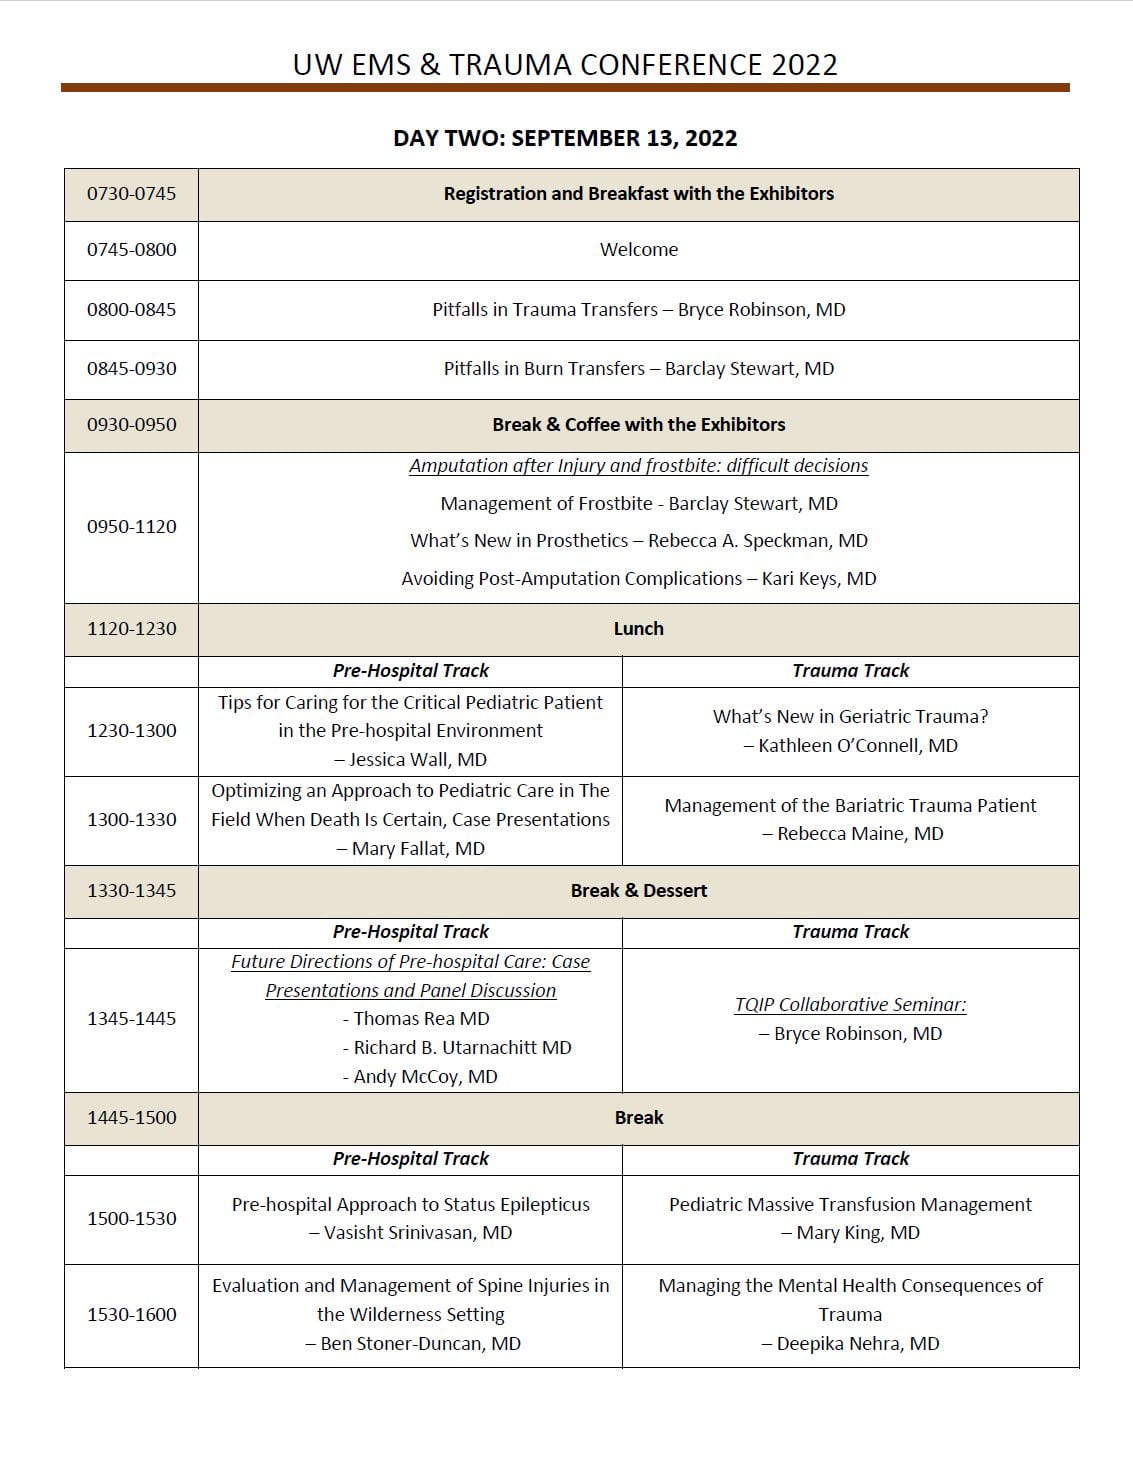 PDF Download - UW EMS & Trauma Conference 2022 - Day 2 Schedule